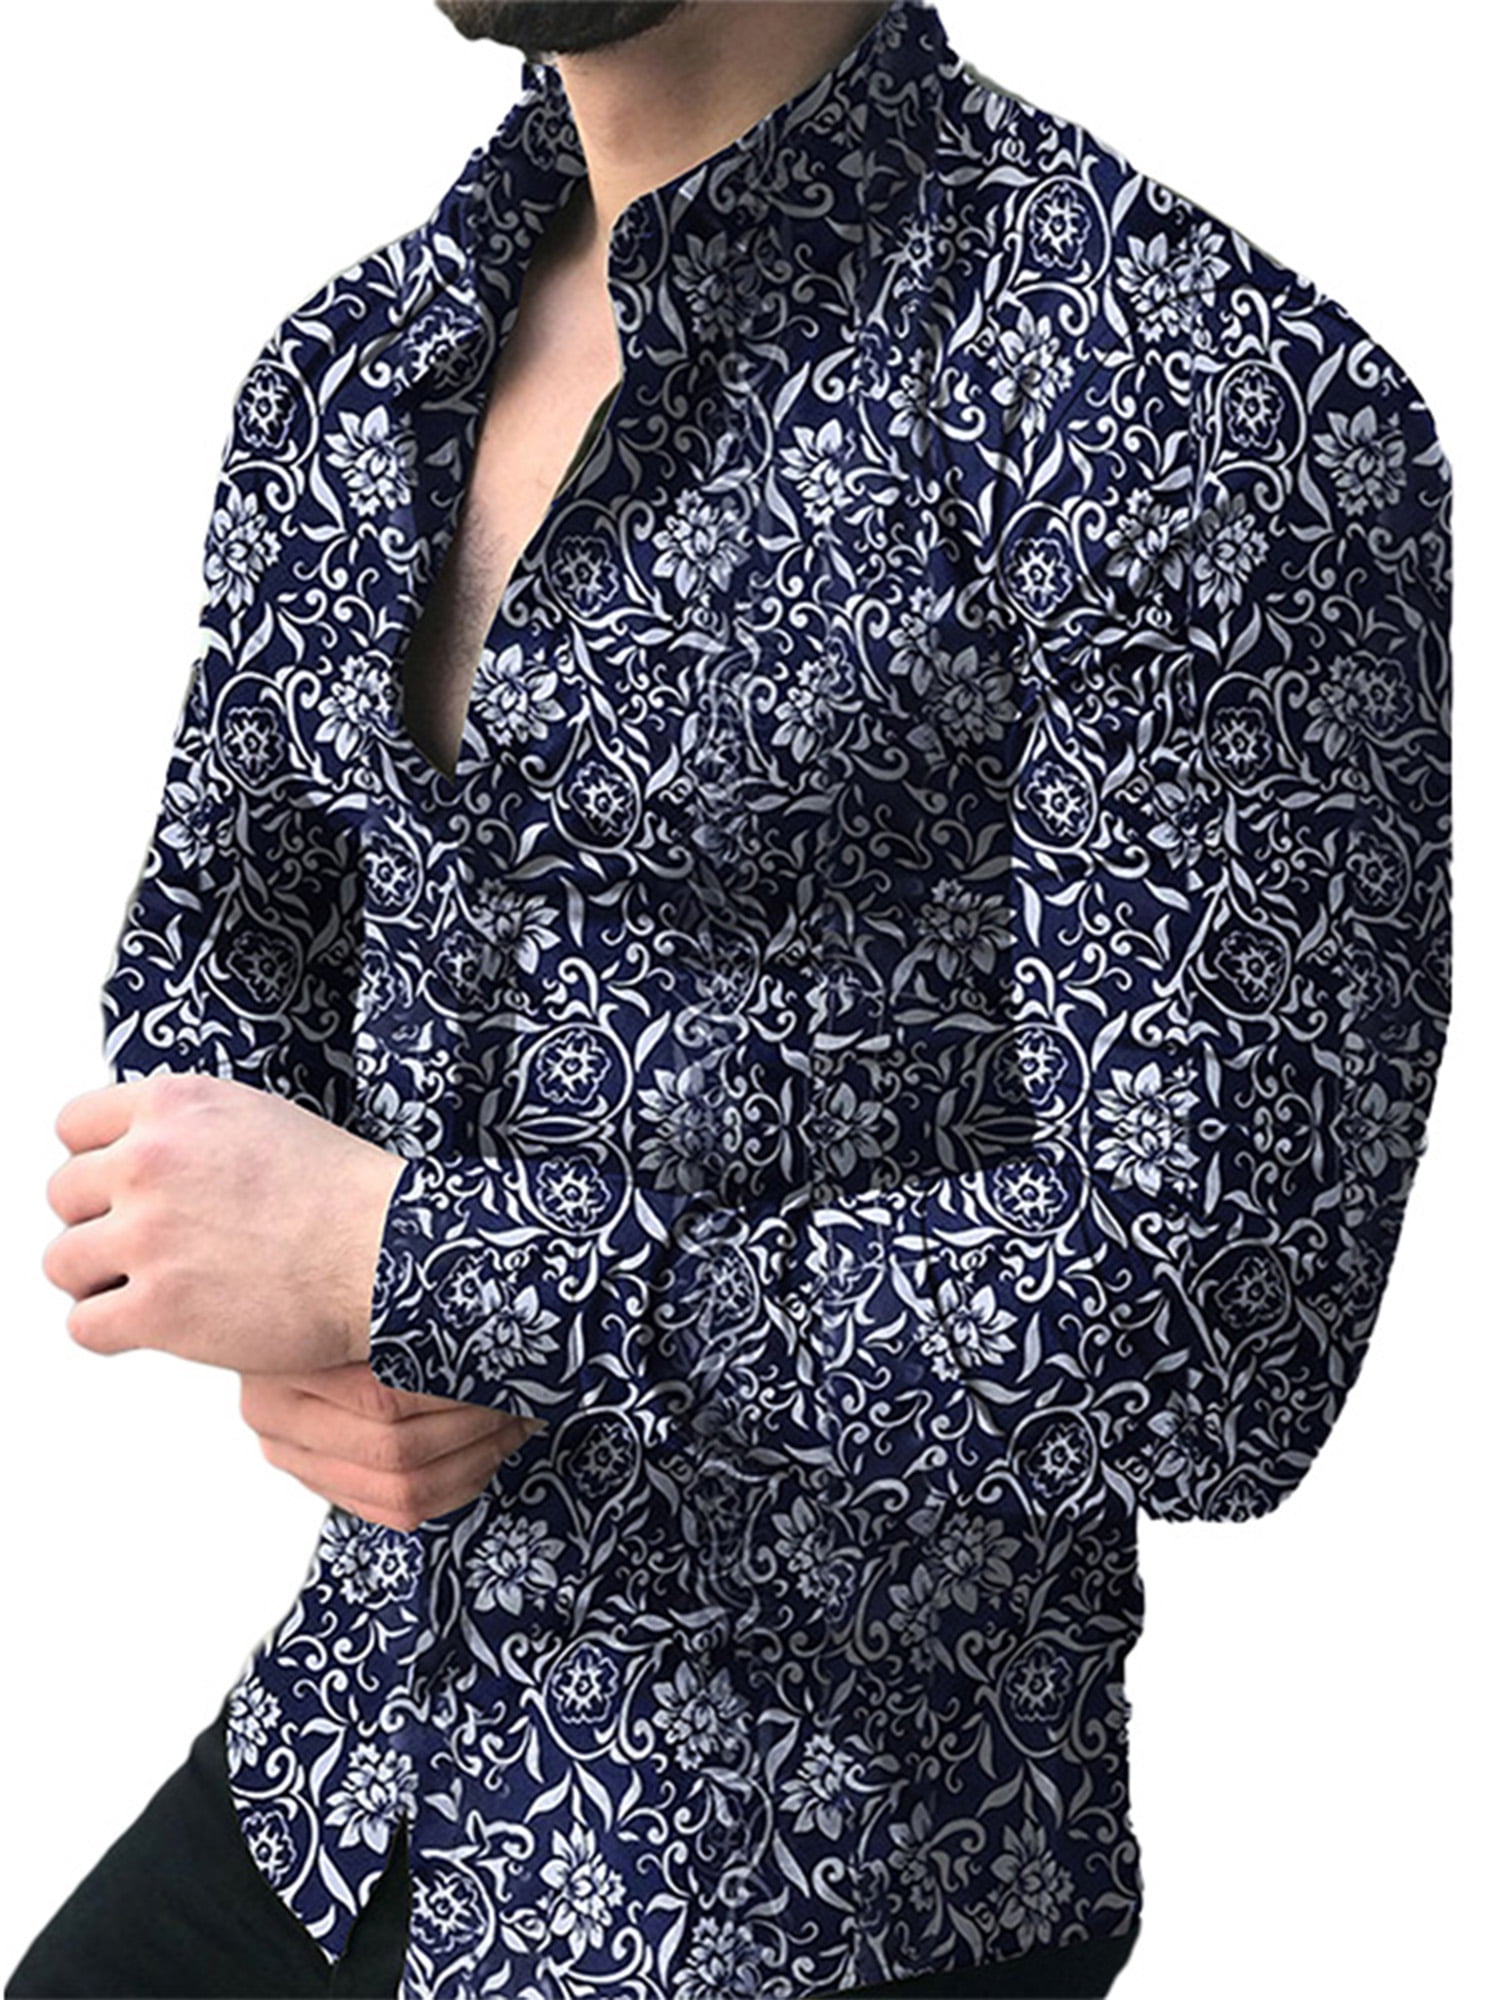 Details about   Eterna Flower Print Formal Long Sleeve Shirt Soft Touch Cotton